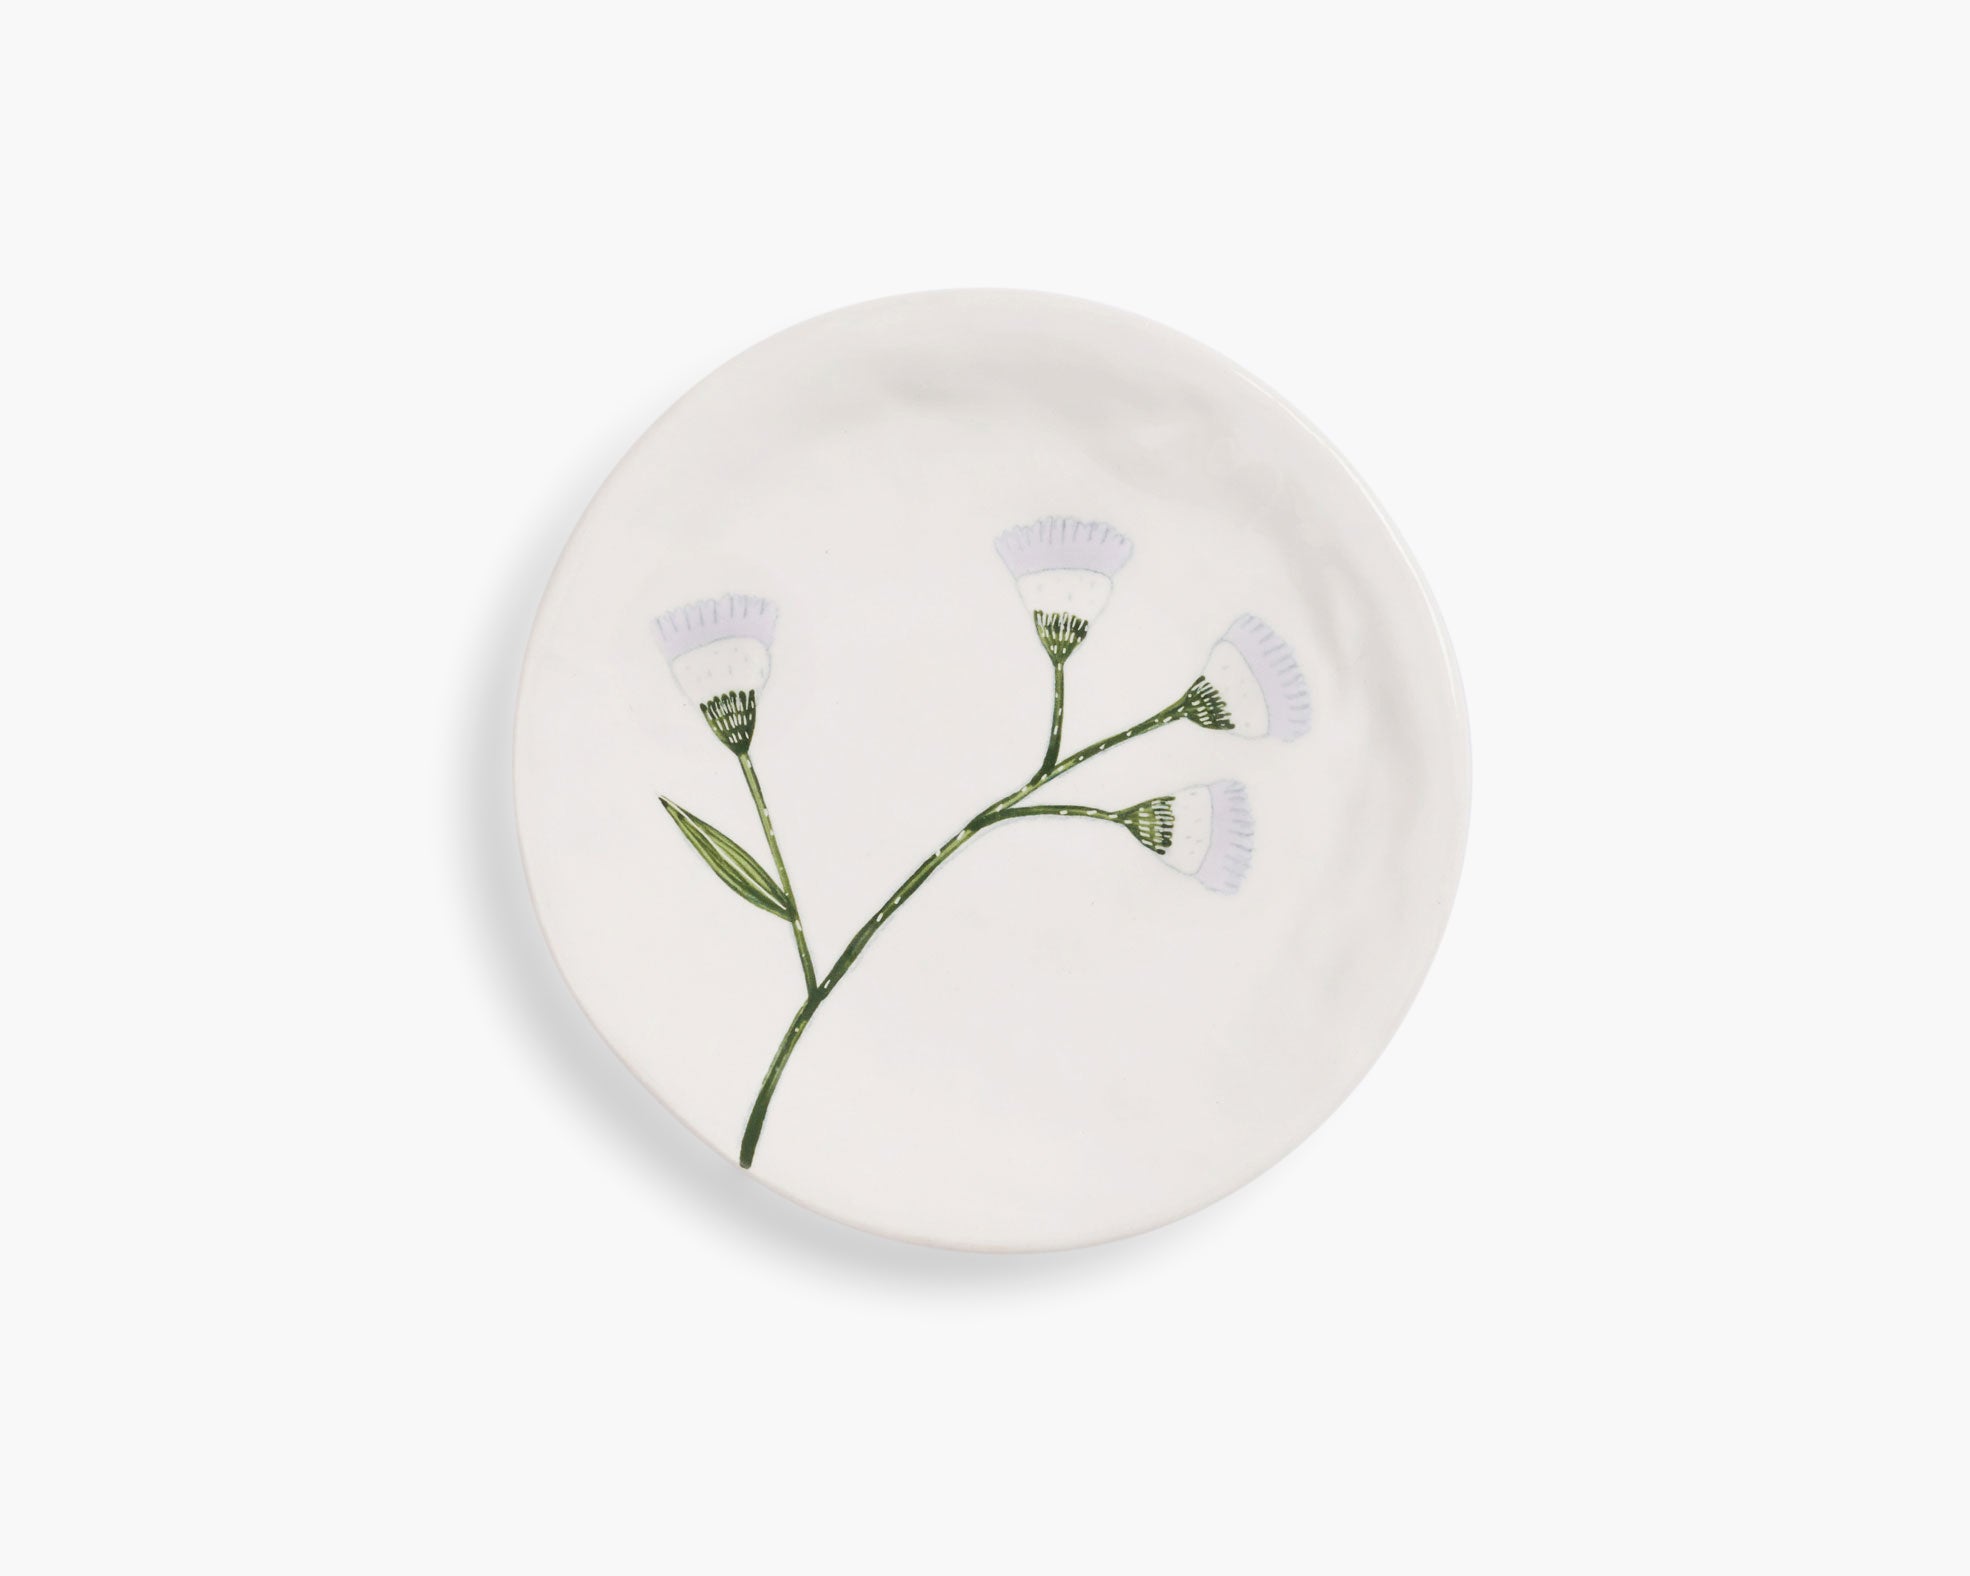 Gemma Orkin 'Wild Flowers' Small Plate - White Wash